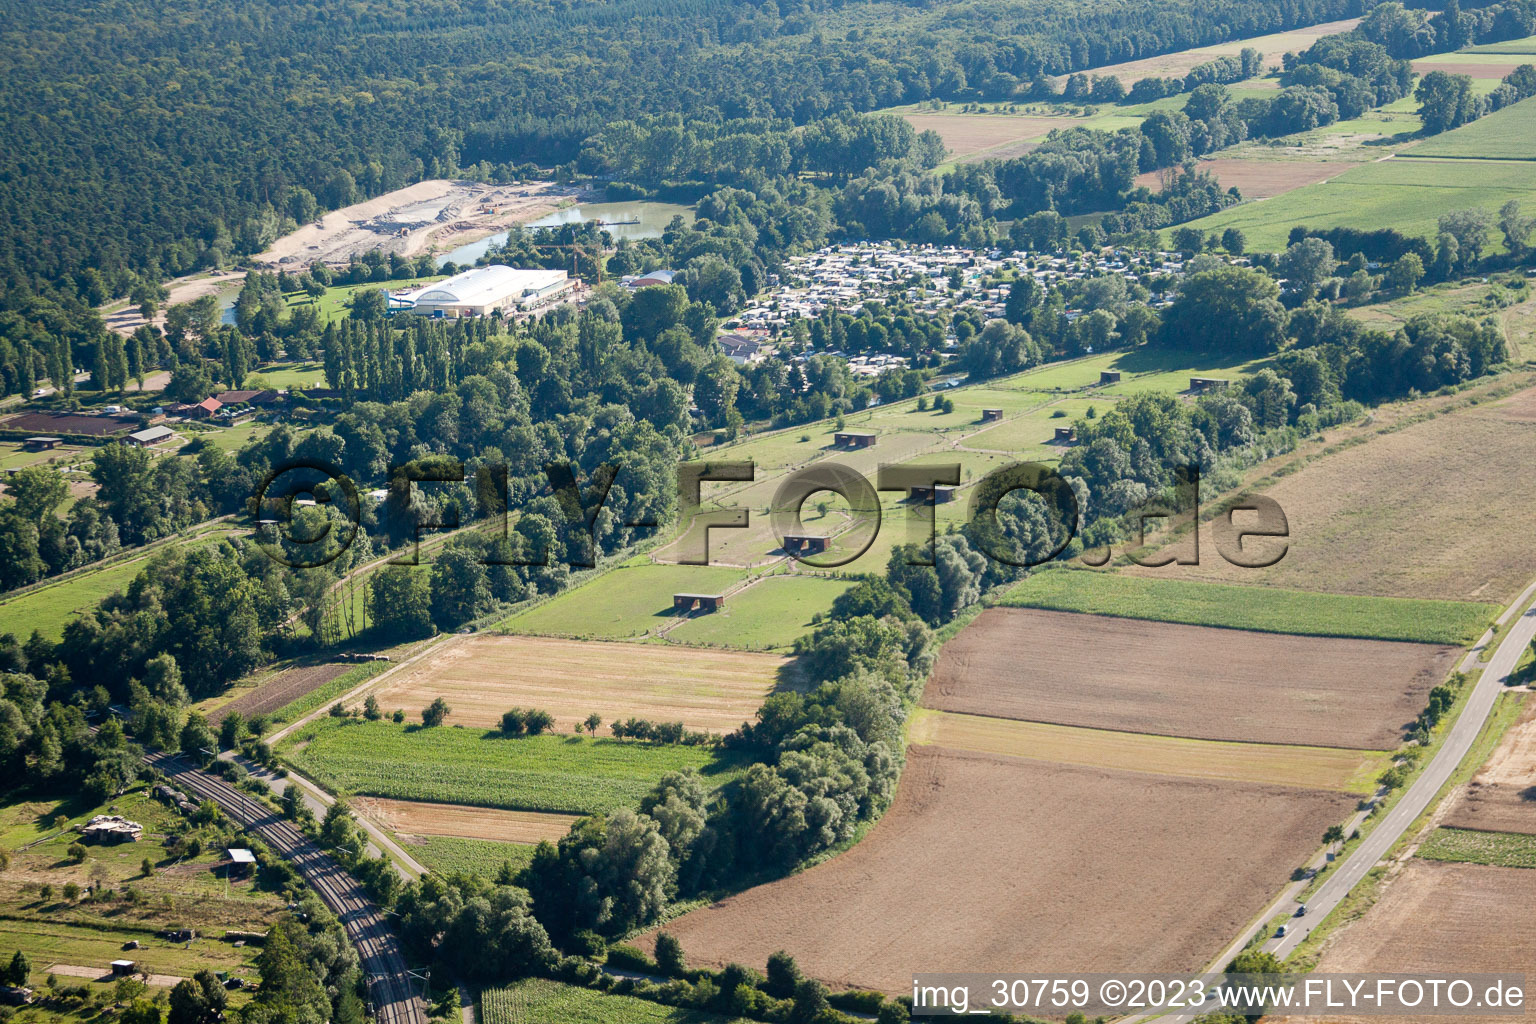 Aerial view of Mhou Ostrich Farm in Rülzheim in the state Rhineland-Palatinate, Germany